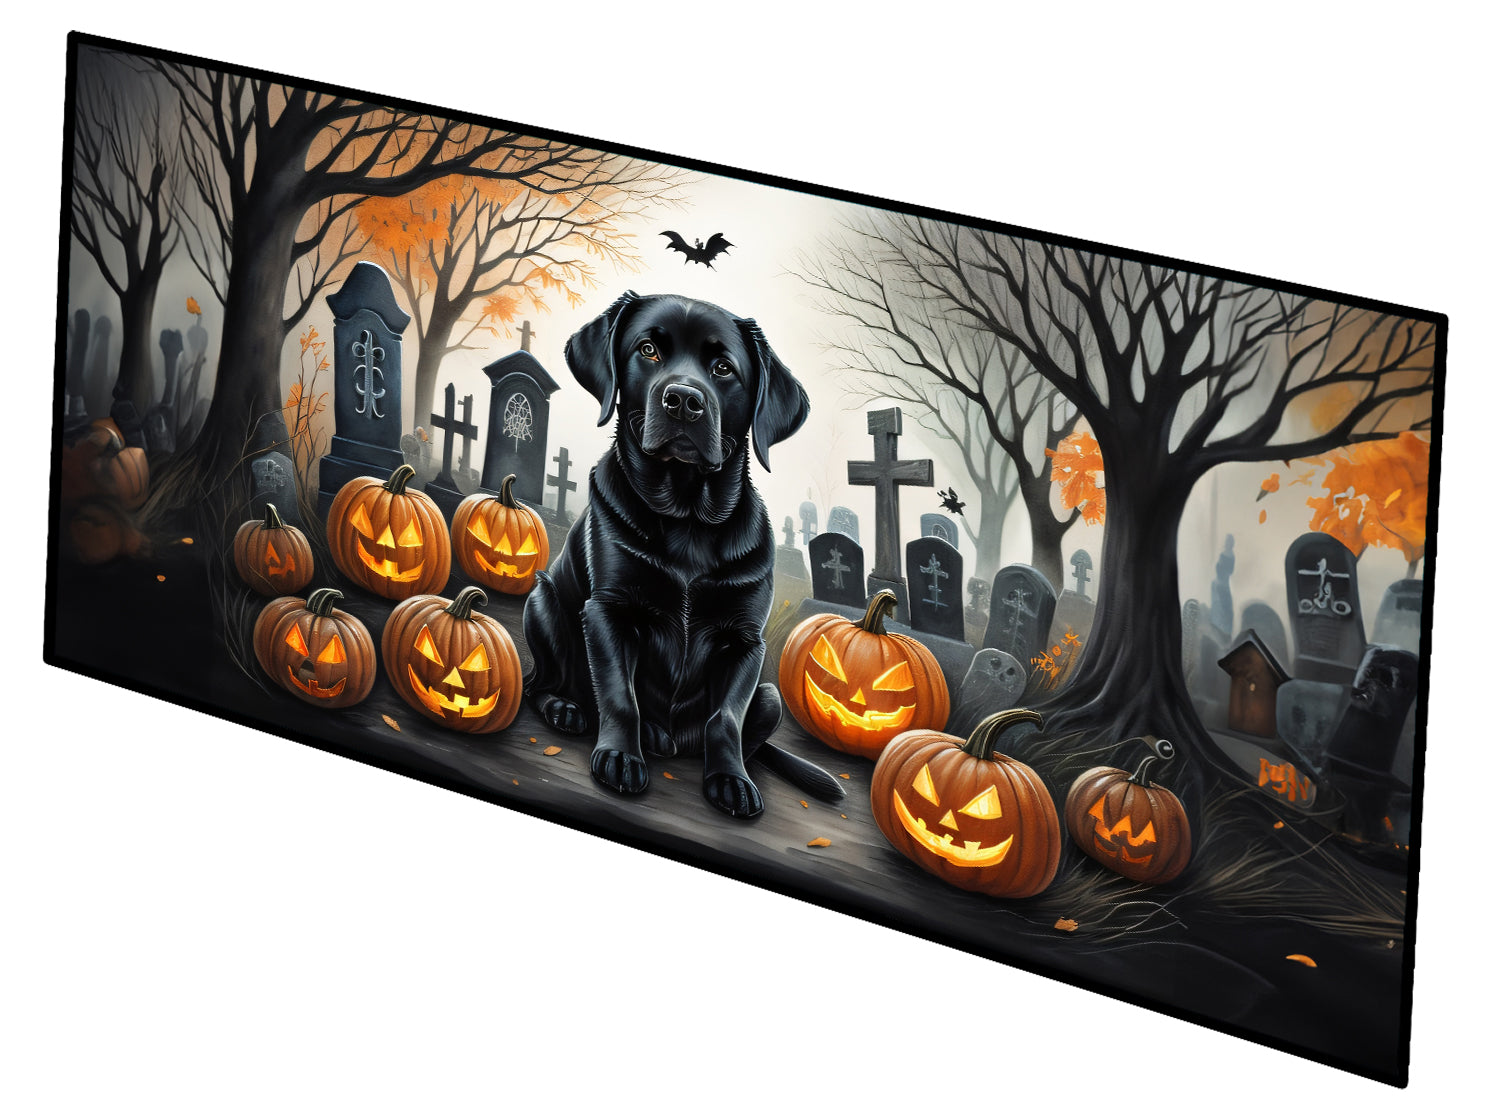 Buy this Black Labrador Retriever Spooky Halloween Runner Mat 28x58